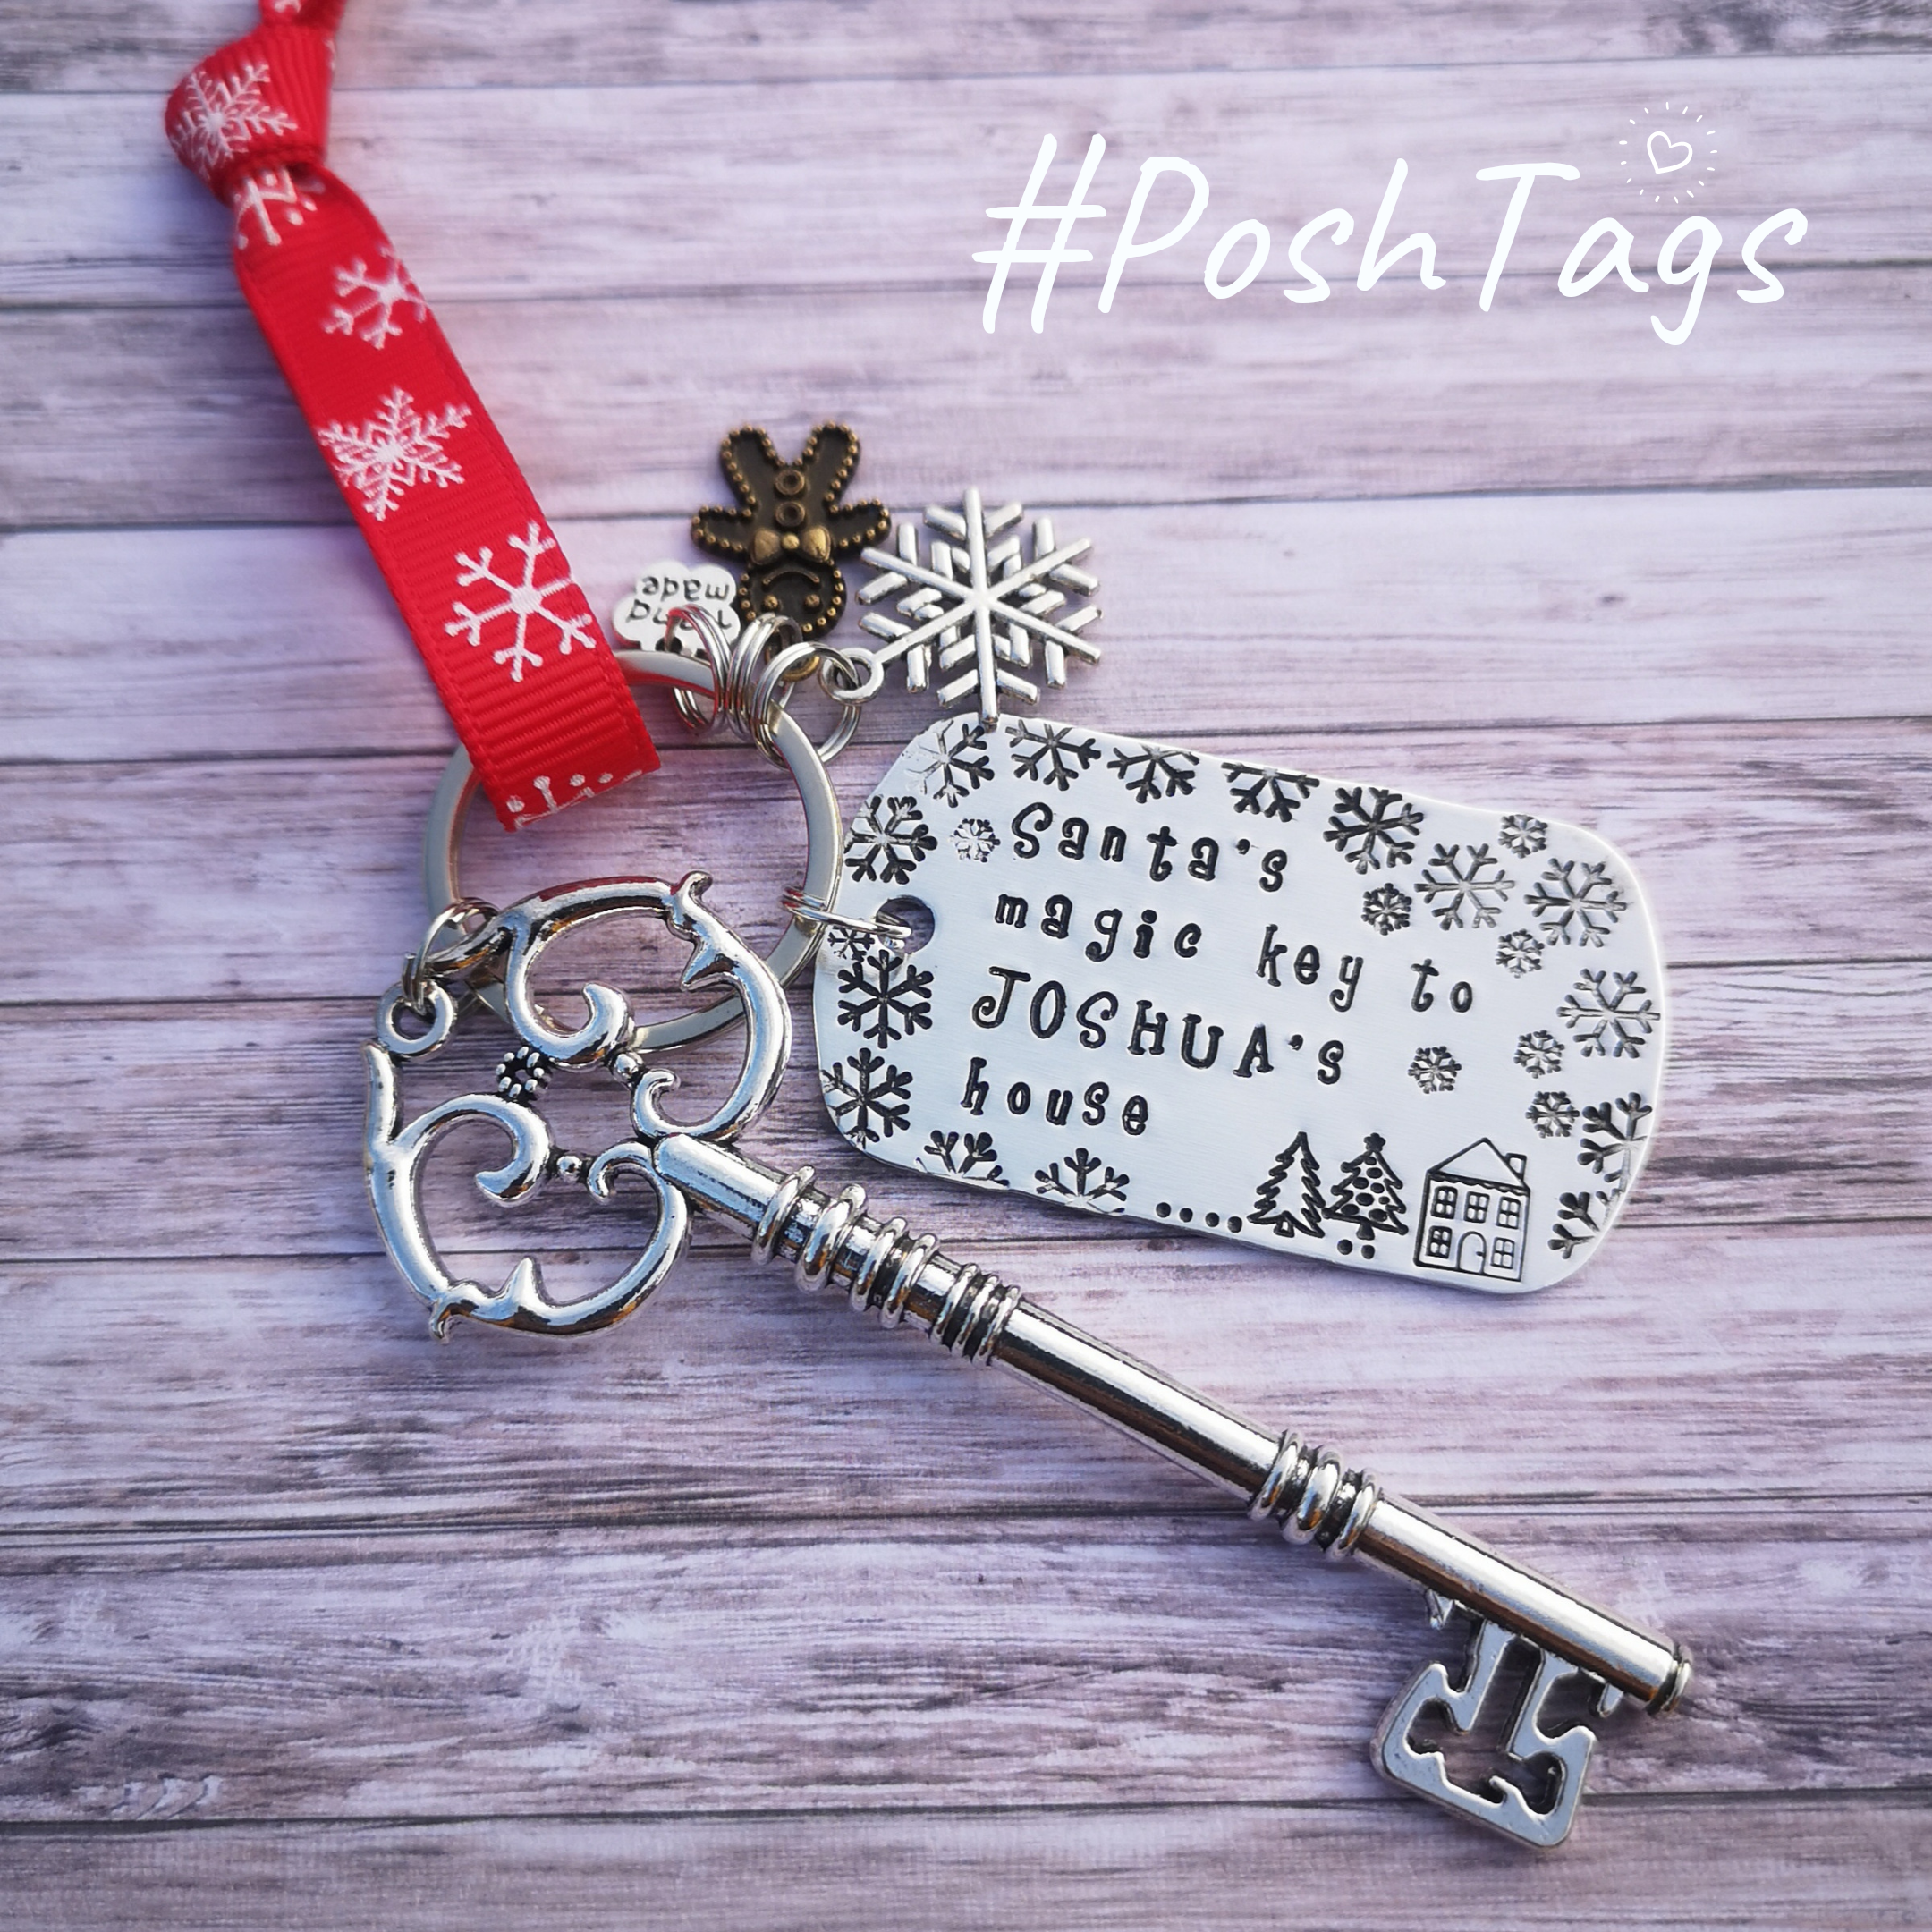 Santa's magic key - personalised magical key for Christmas with gift box  #Poshtags